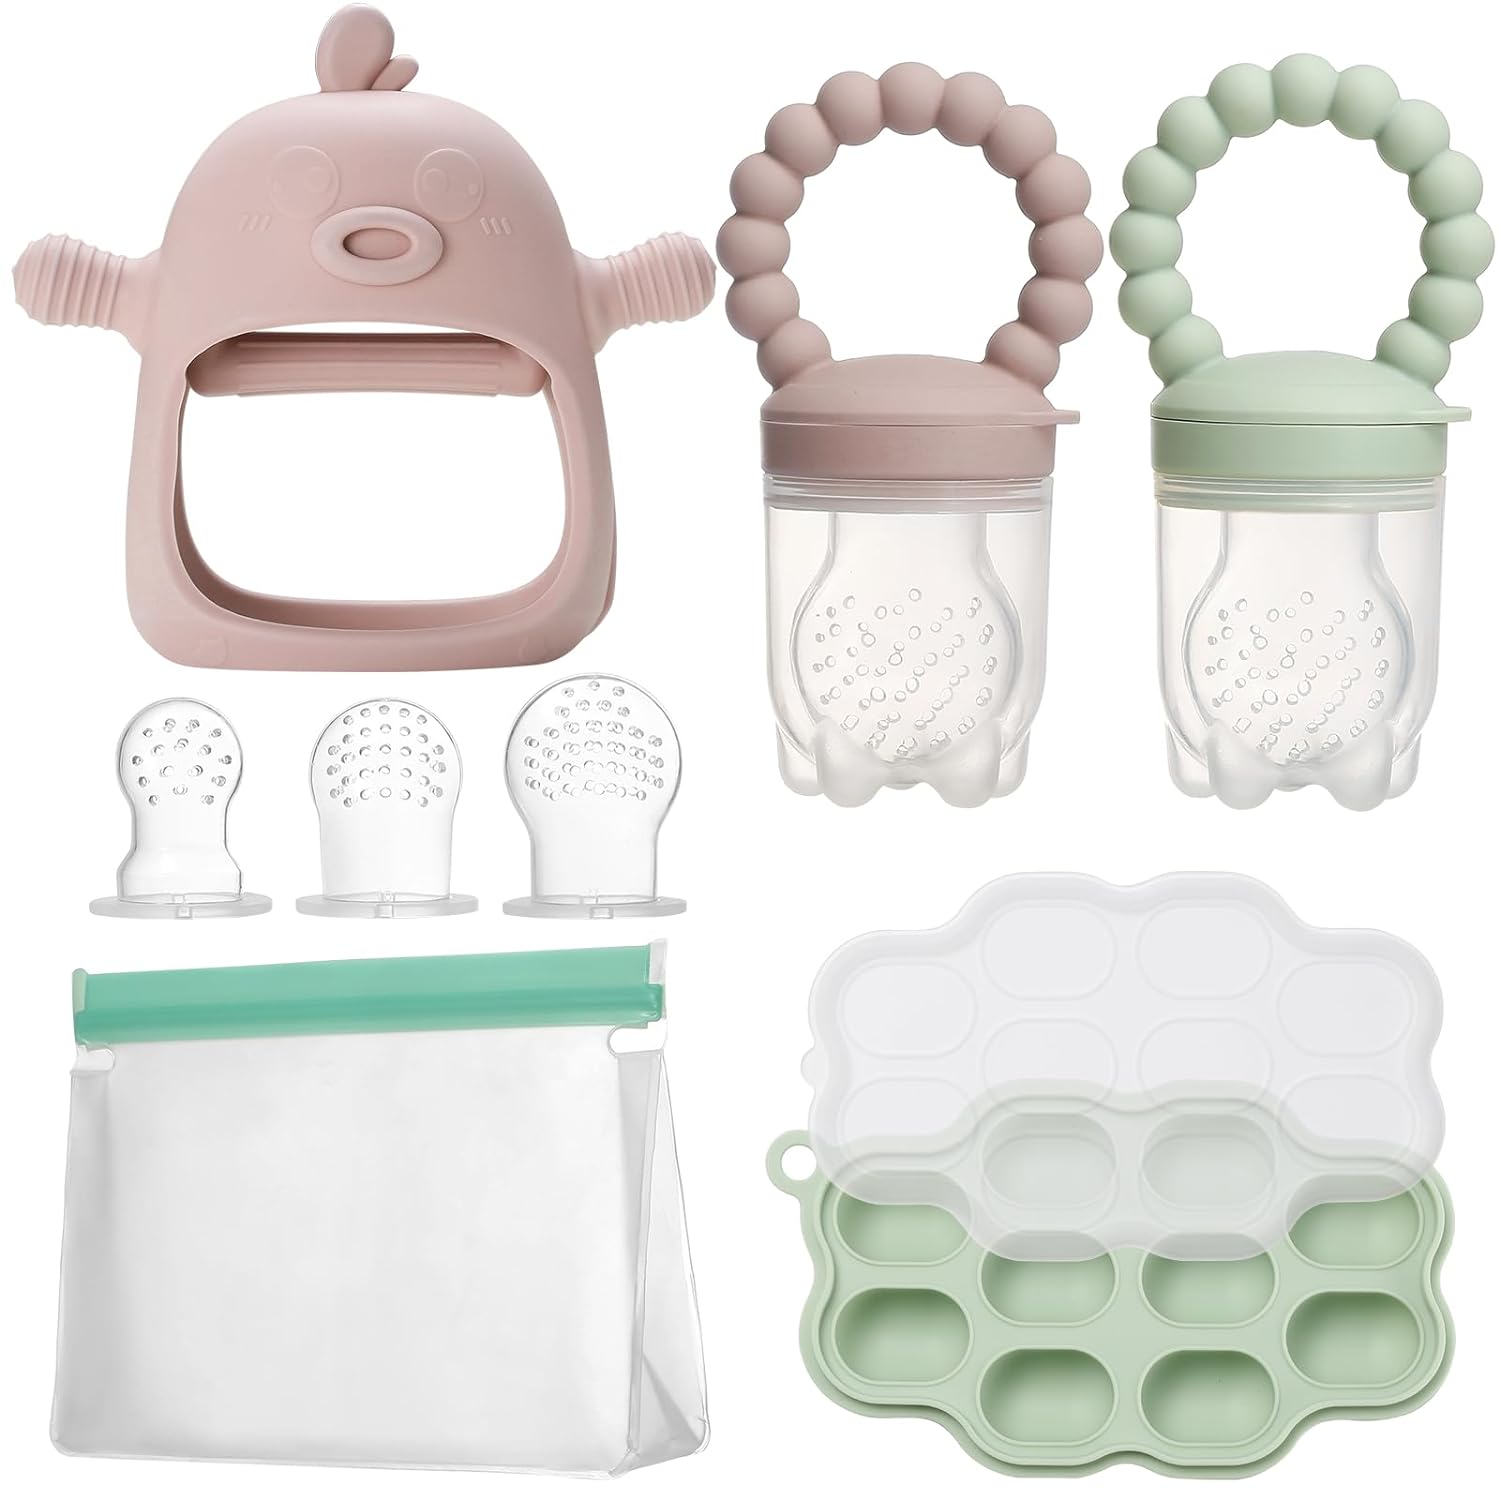 WEST STORY Baby Feeding & Teething Kit